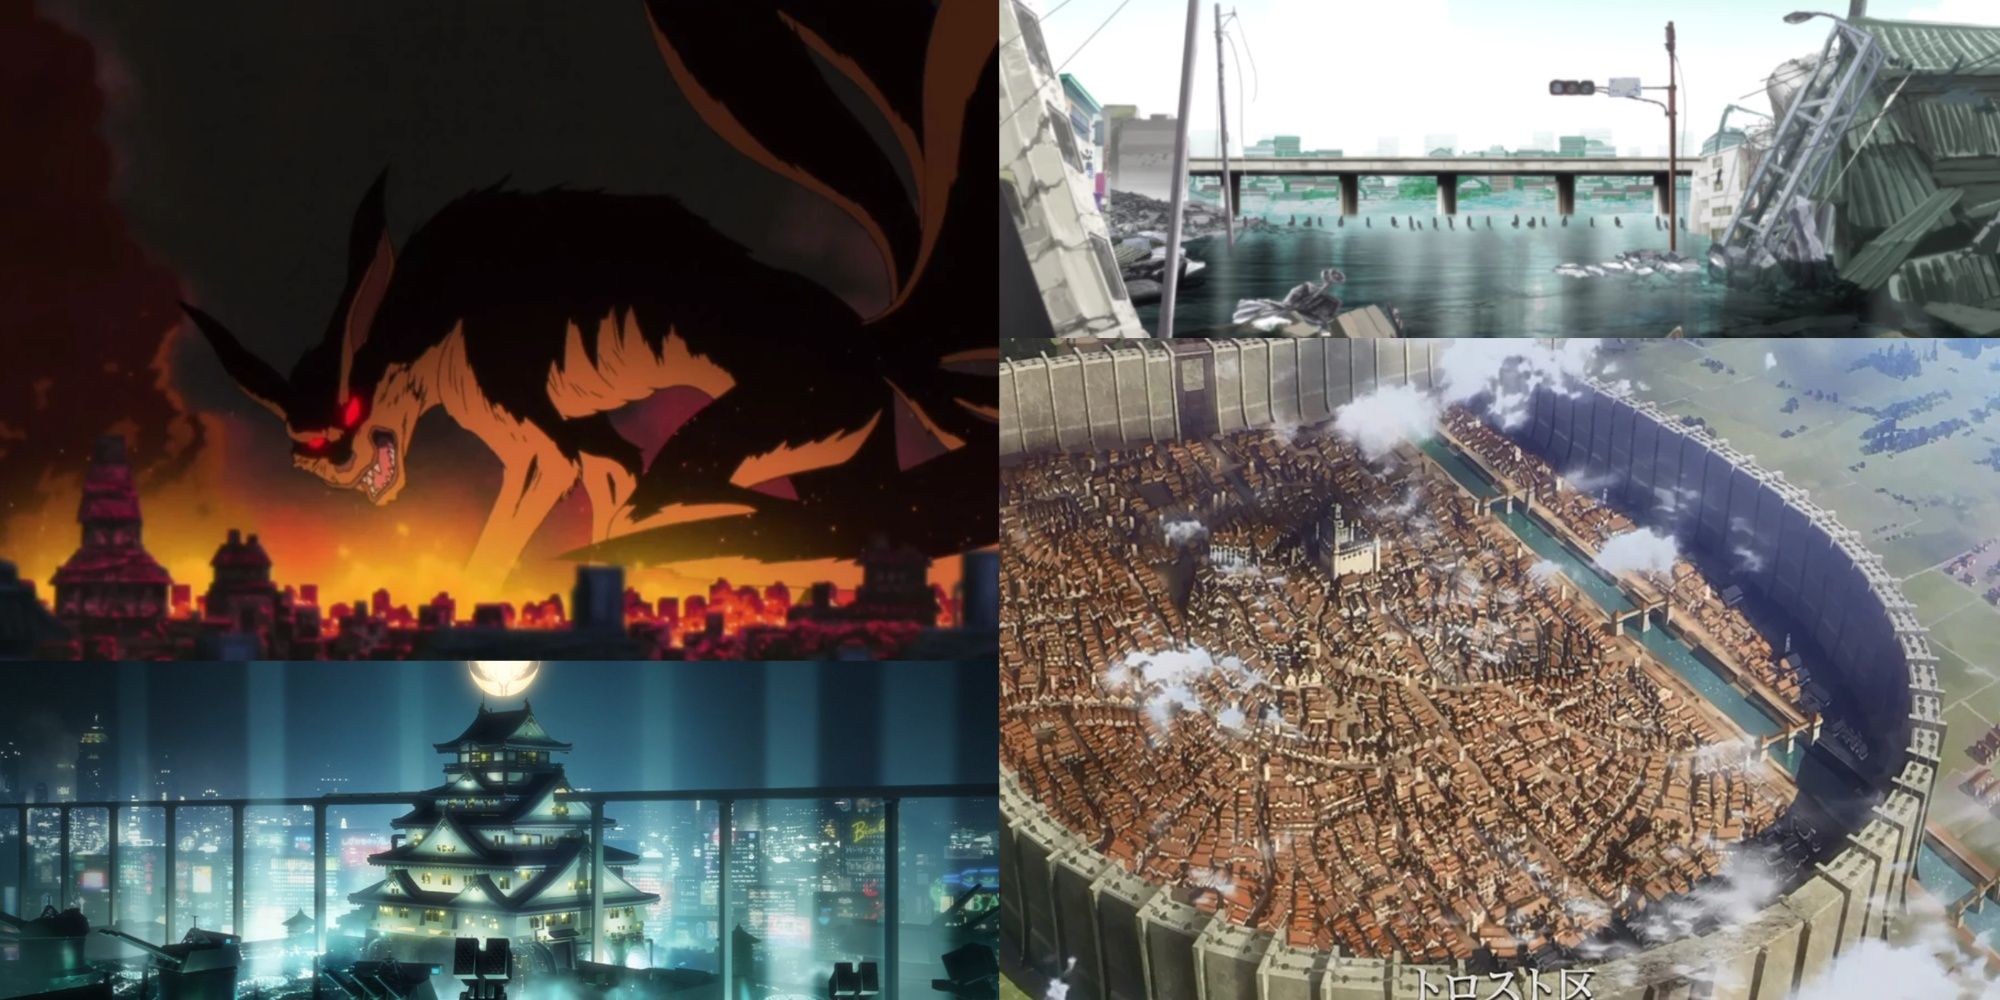 Naruto, Akudama Drive, Japan Sinks and AOT worlds